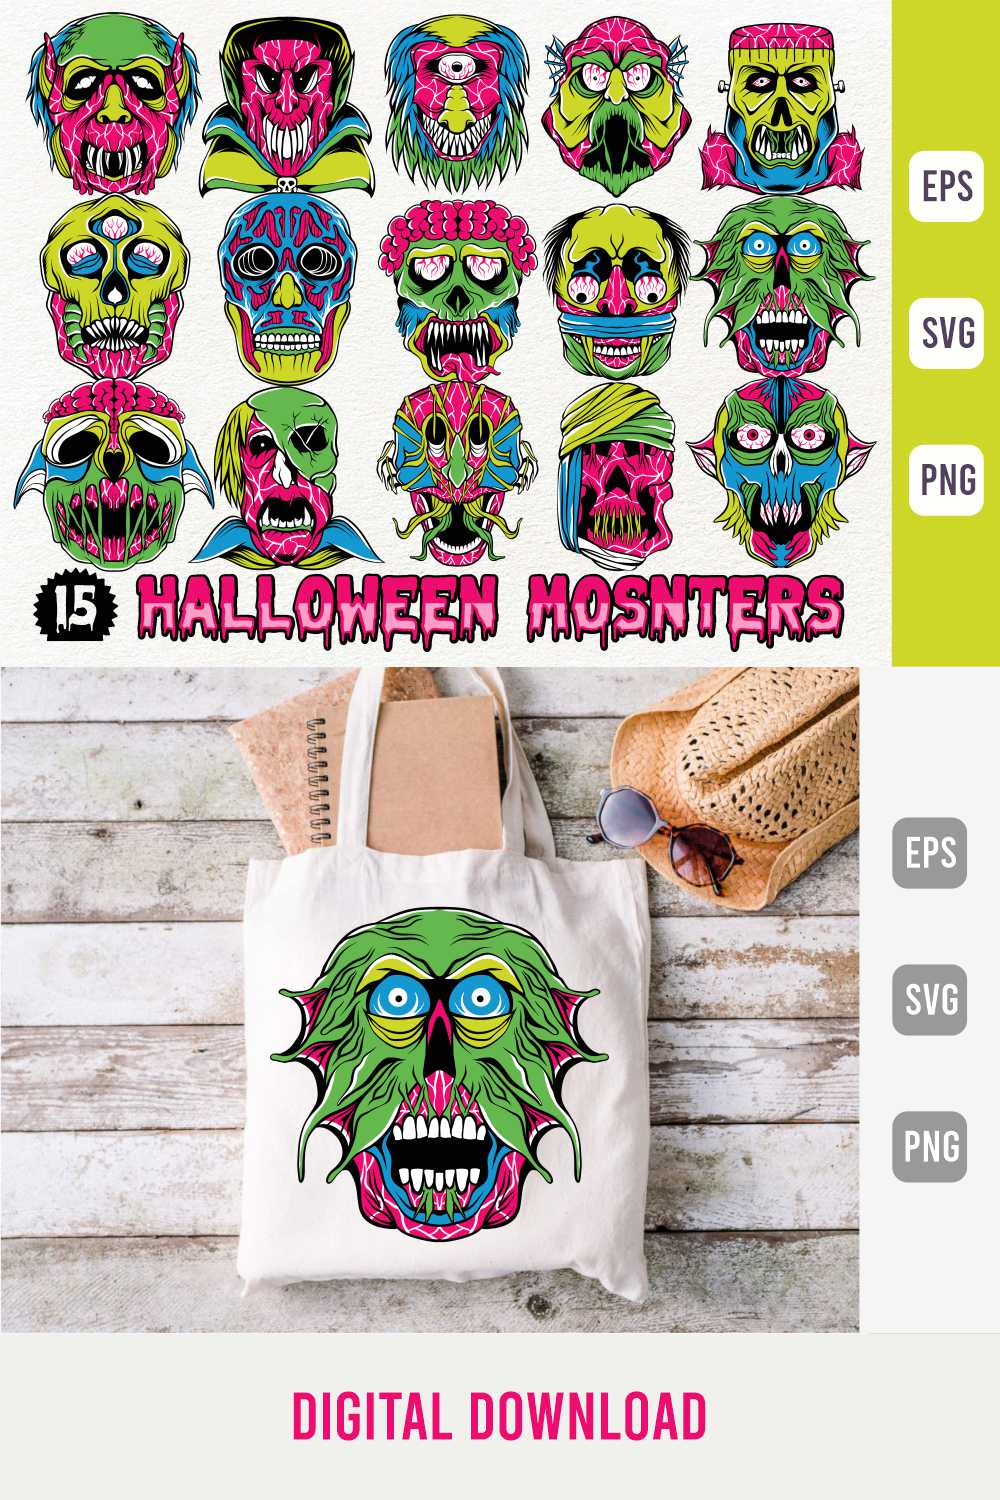 Spooky Halloween Monster Creatures Character Designs Bundle pinterest preview image.